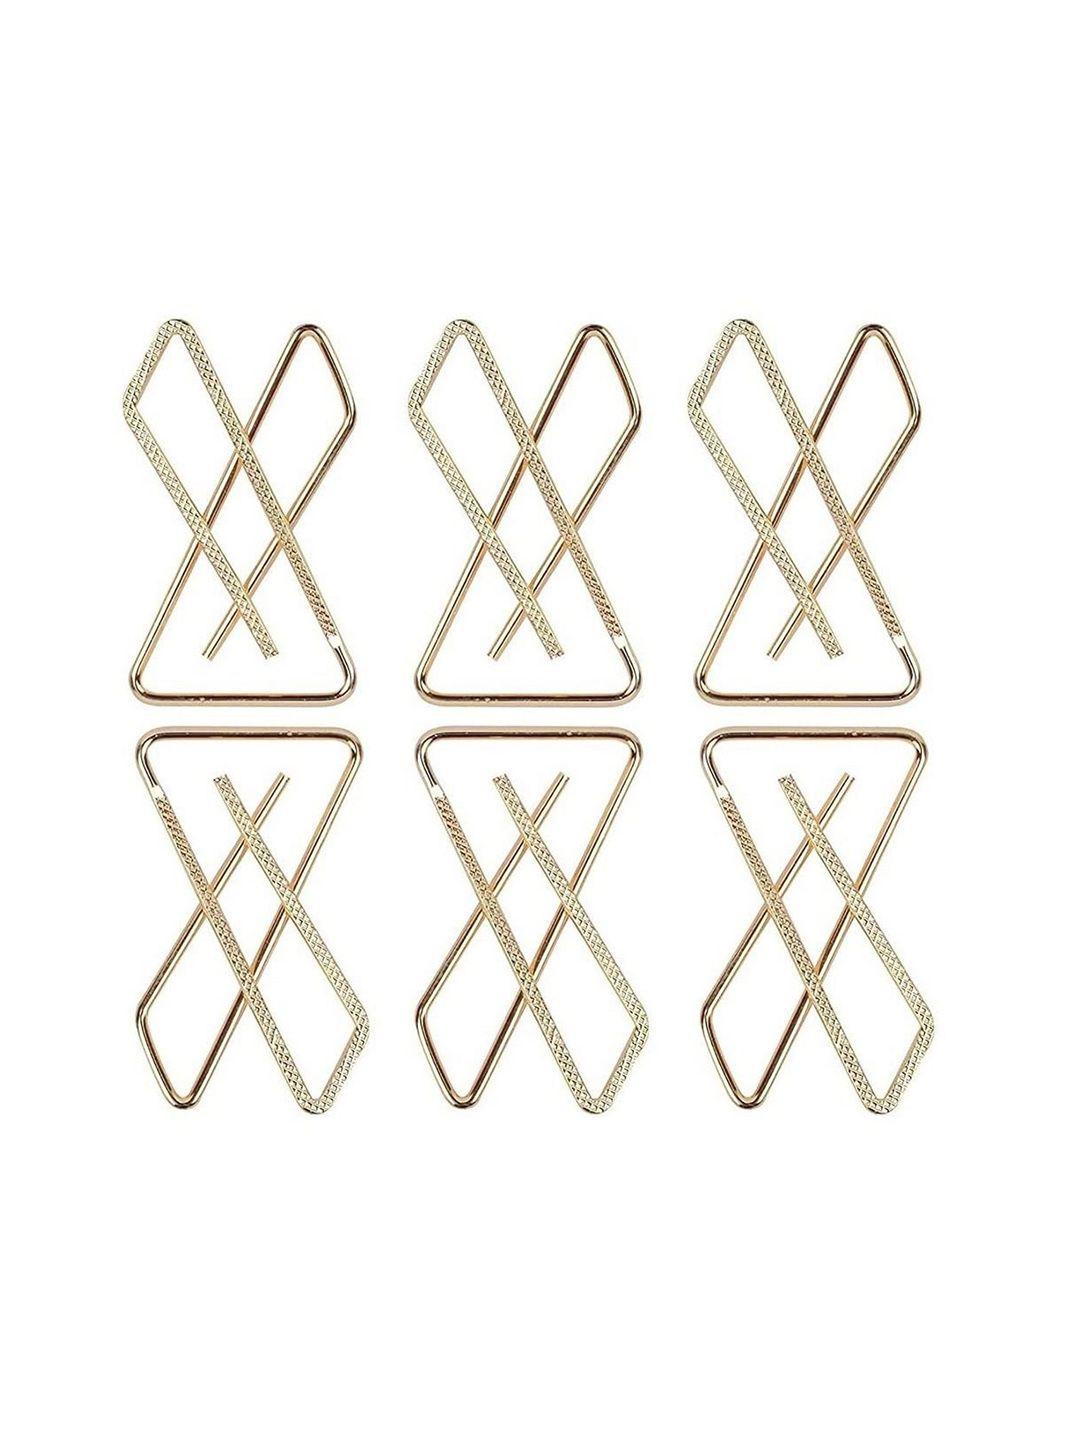 vama set of 6 rhinestone studded safety saree pins